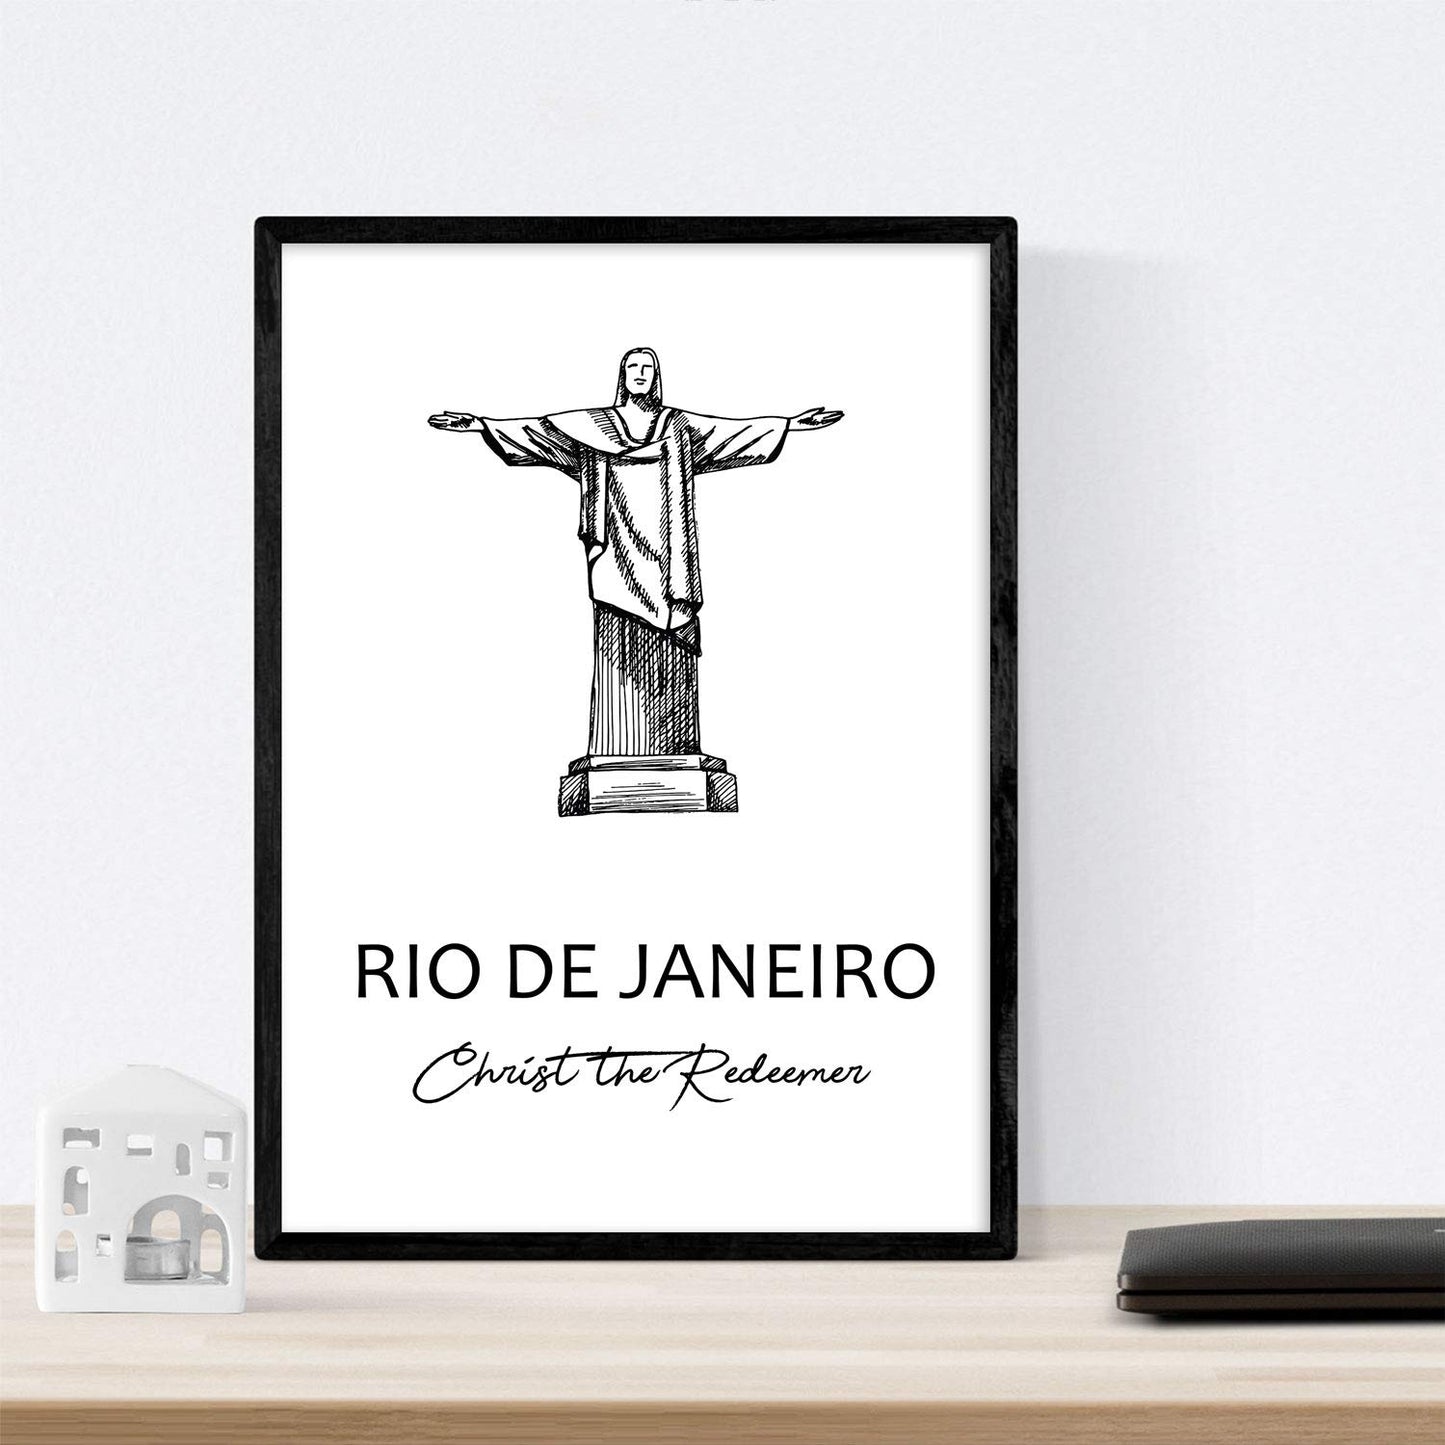 Pack de posters de Rio de Janeiro - El cristo redentor. Láminas con monumentos de ciudades.-Artwork-Nacnic-Nacnic Estudio SL